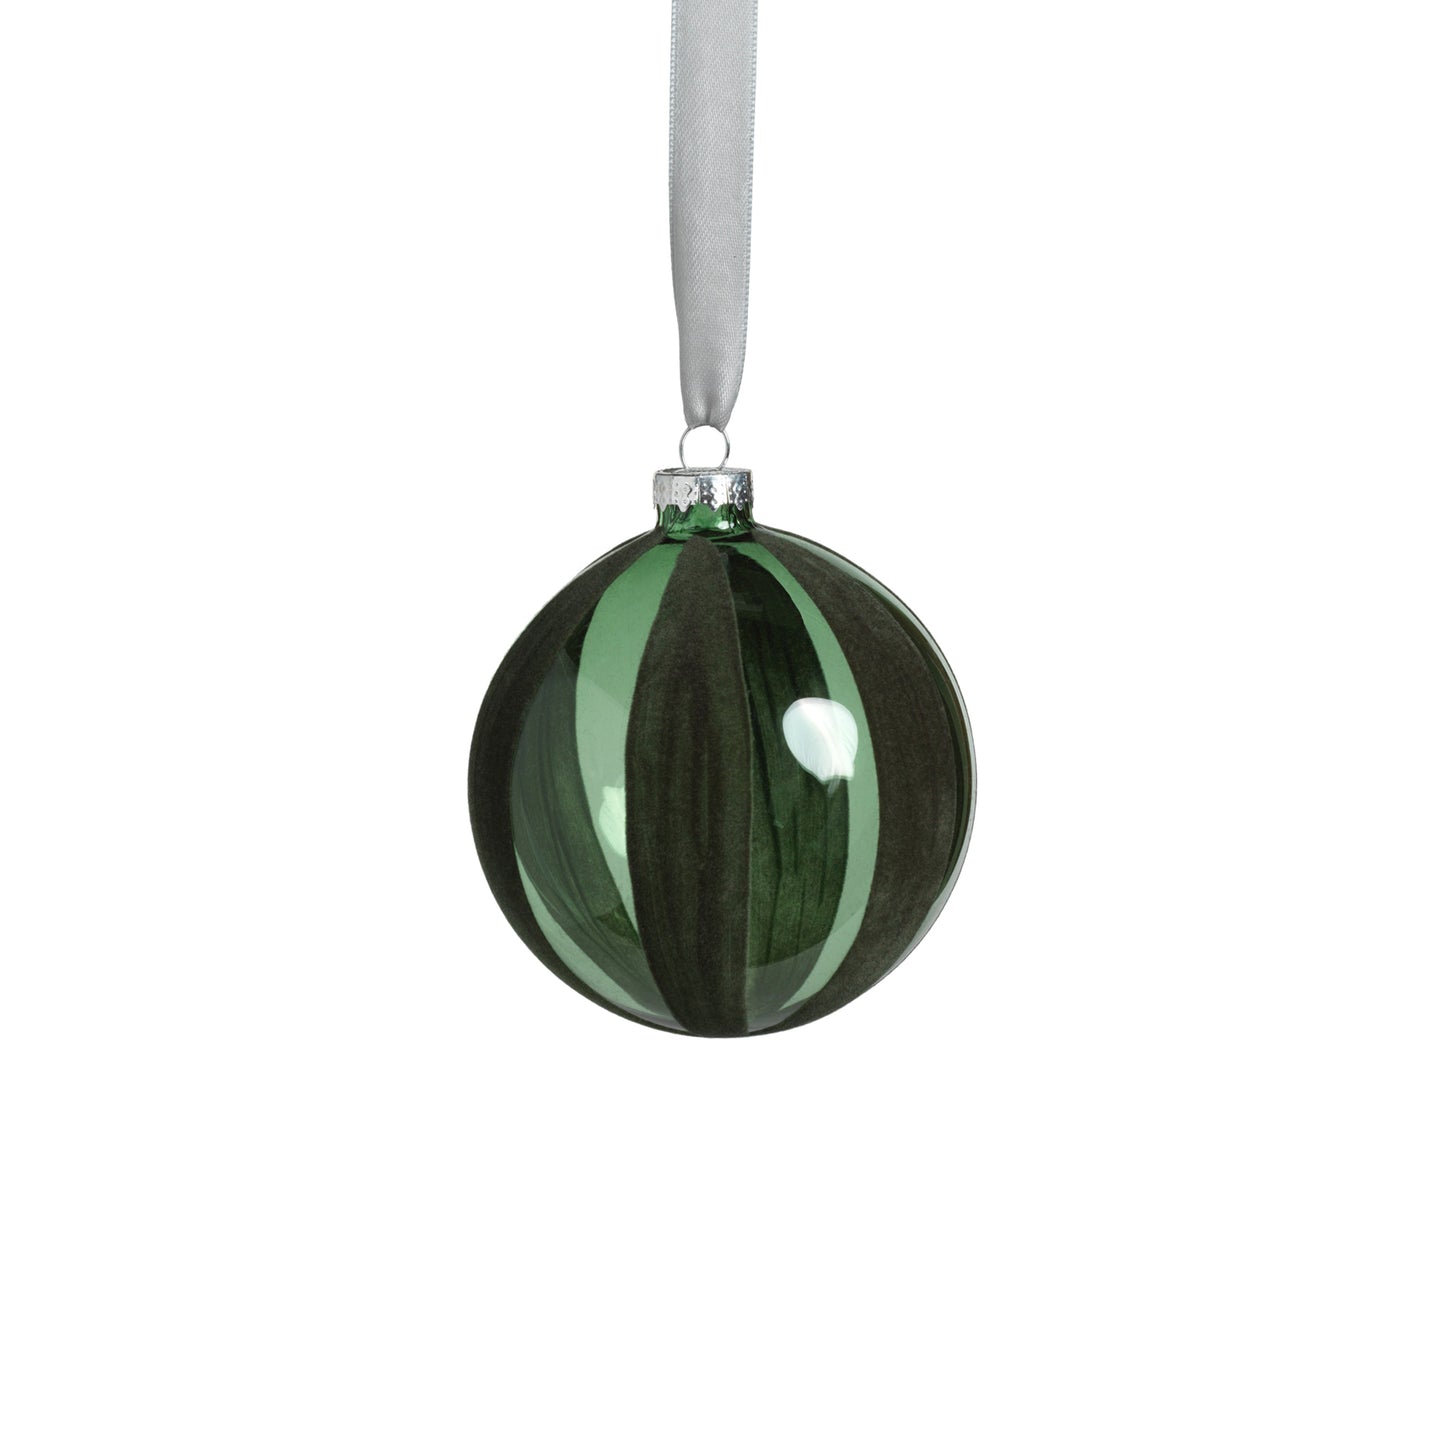 Flocked Green Glass Ornament 4.75"